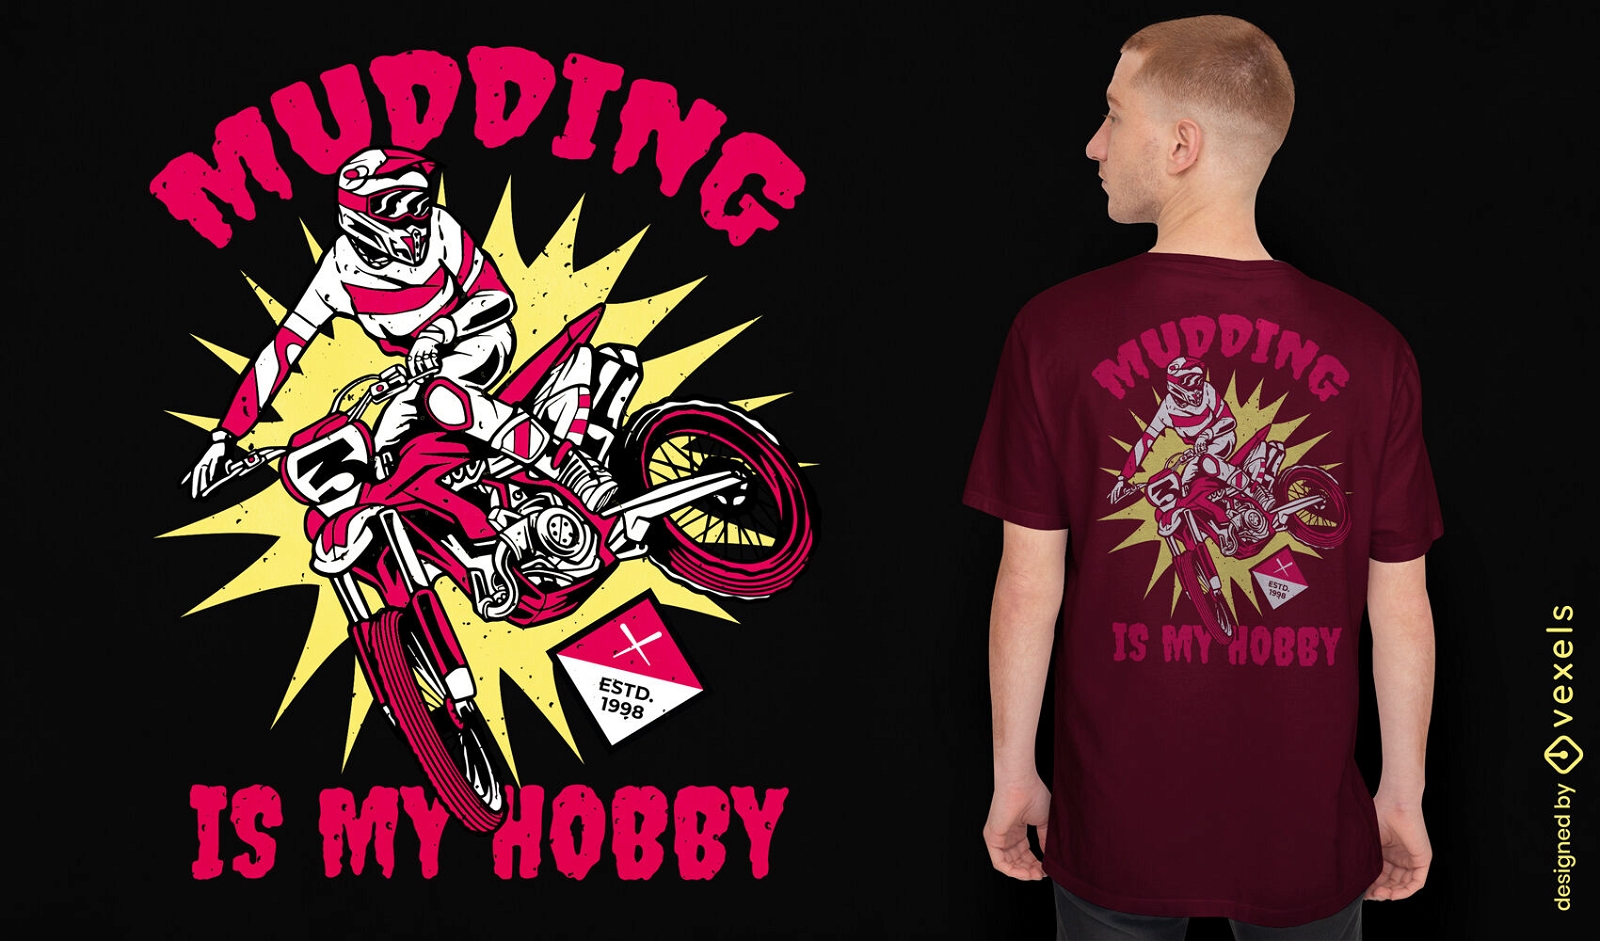 Motocross Whip quote t-shirt design